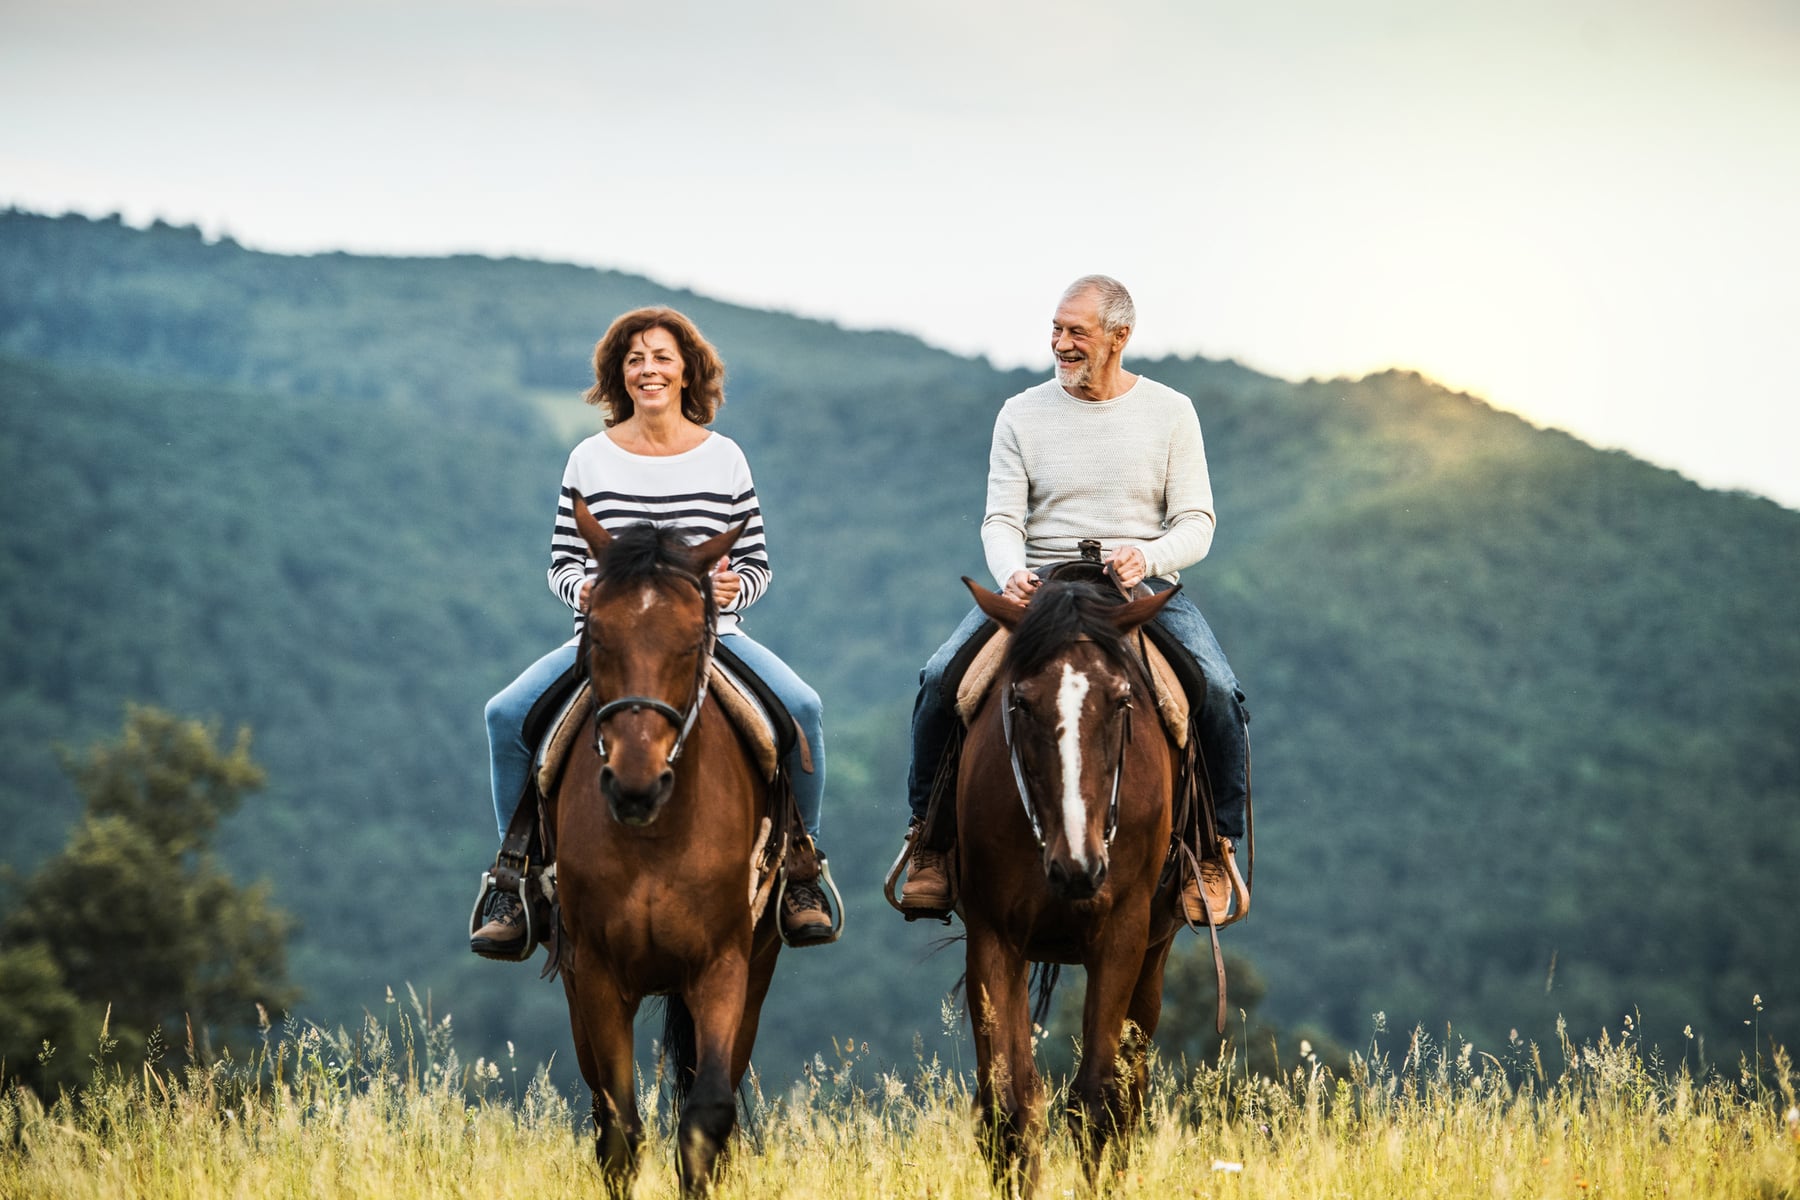 Older couple riding horses through the mountains.